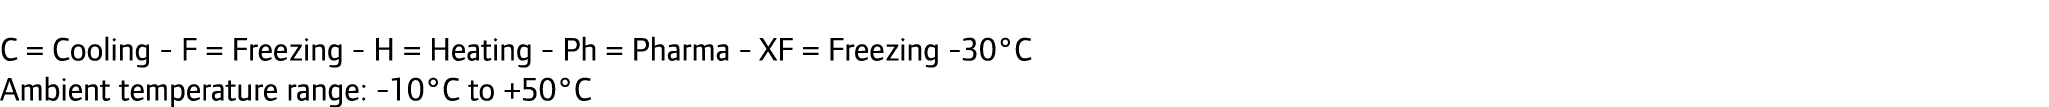 C = Cooling - F = Freezing - H = Heating - Ph = Pharma - XF = Freezing -30°C Ambient temperature range: -10°C to +50°C